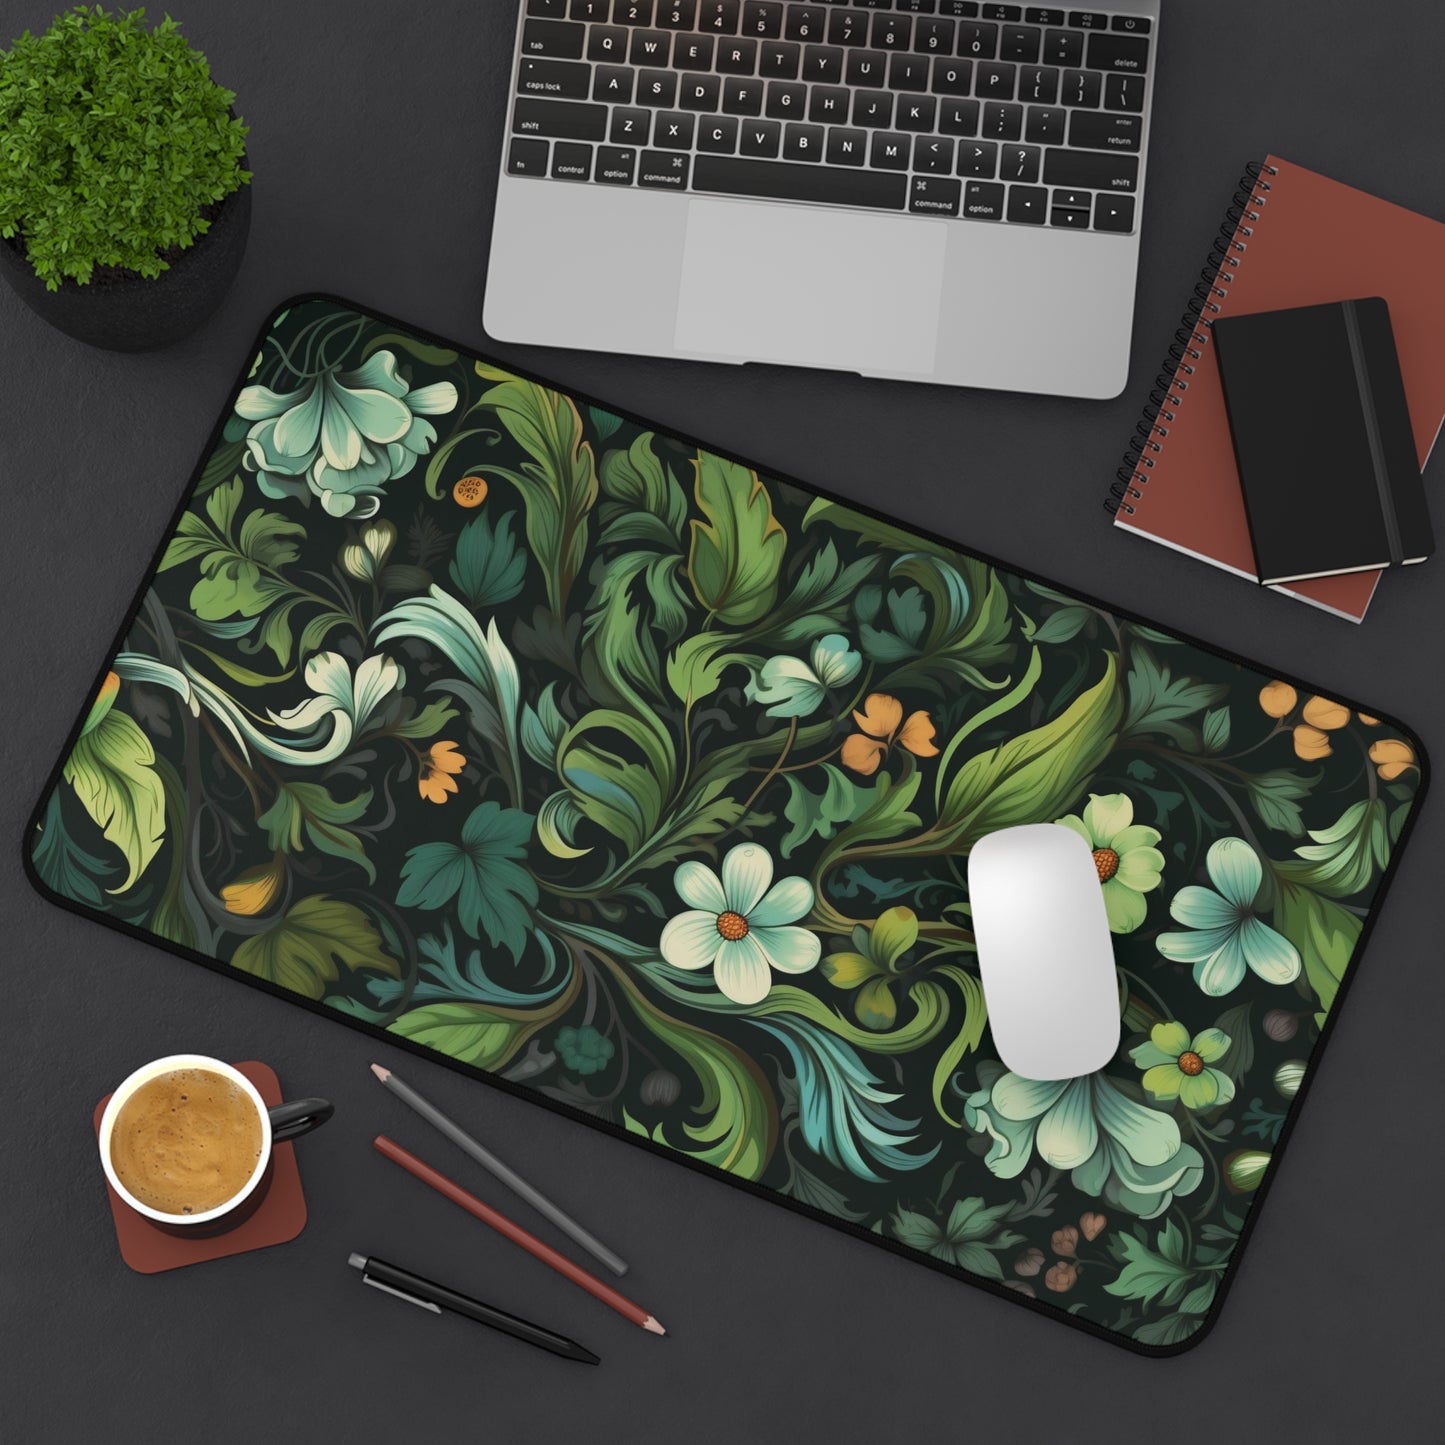 Enchanted Garden Desk Mat, Tranquil Teal Flowers and Green Leaves Desk Pad, Floral Mouse Pad, Cottagecore Keyboard Mat, Botanical Desk Decor